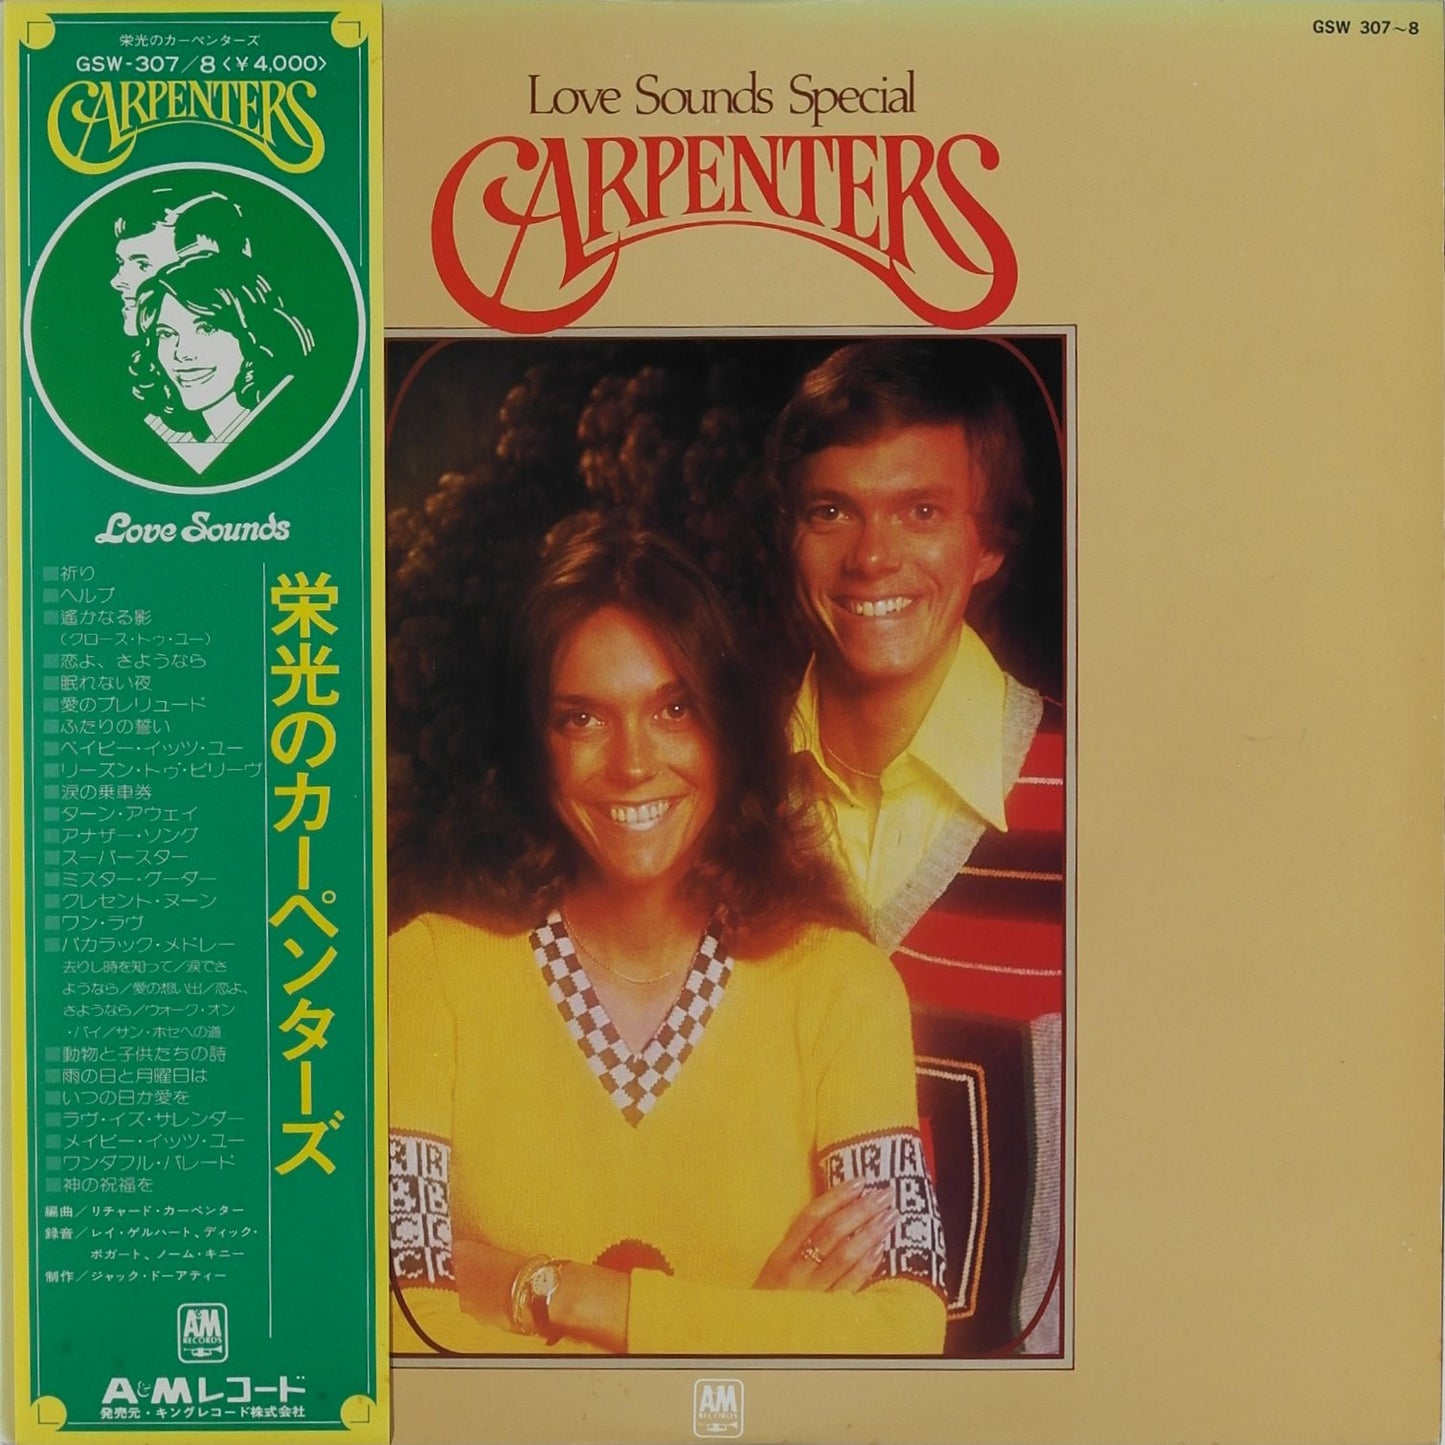 CARPENTERS - Love Sounds Special